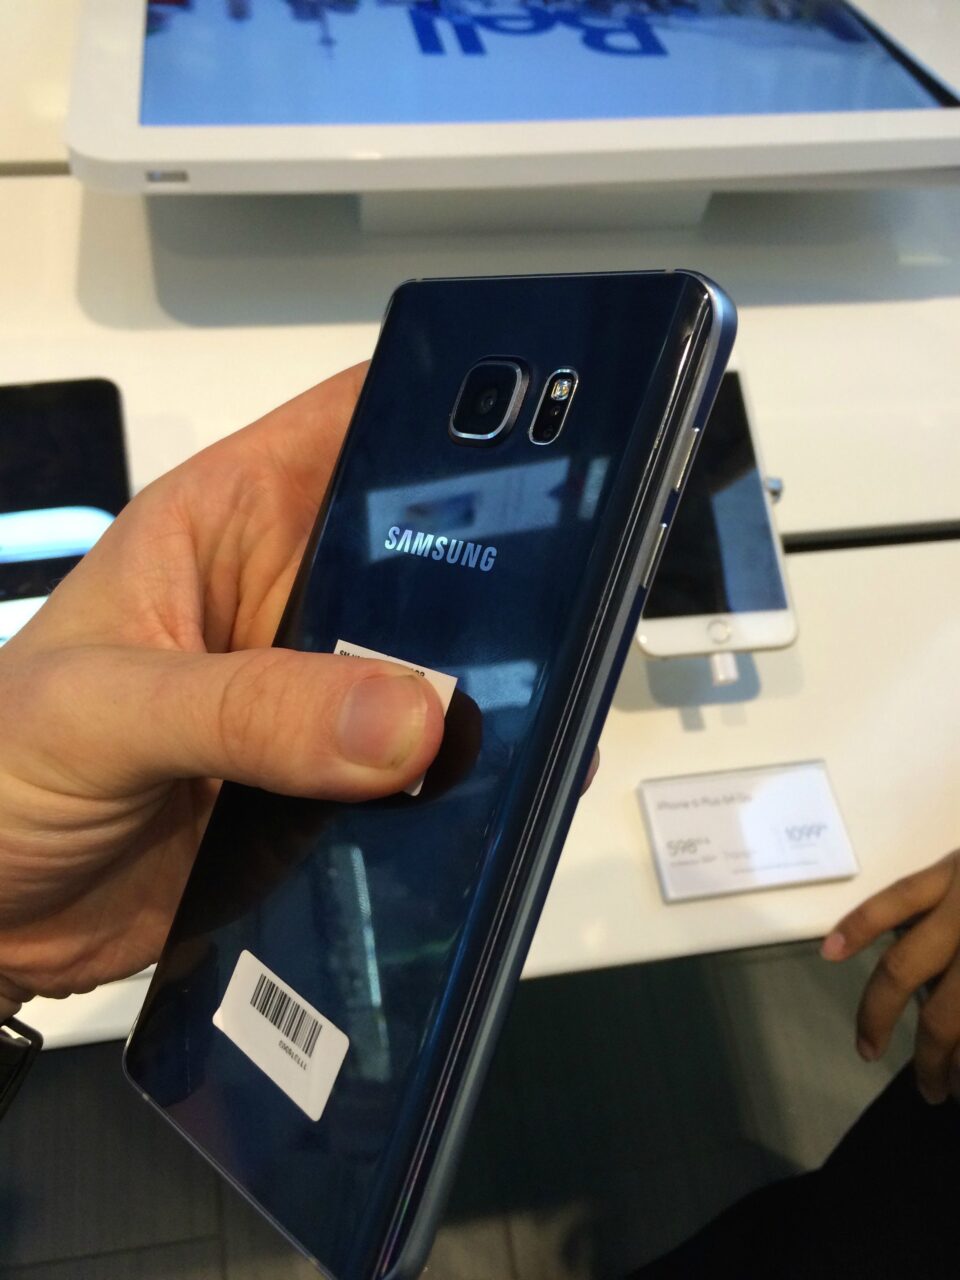 「Galaxy Note5/S6 Edge+」ハンズオン写真複数公開